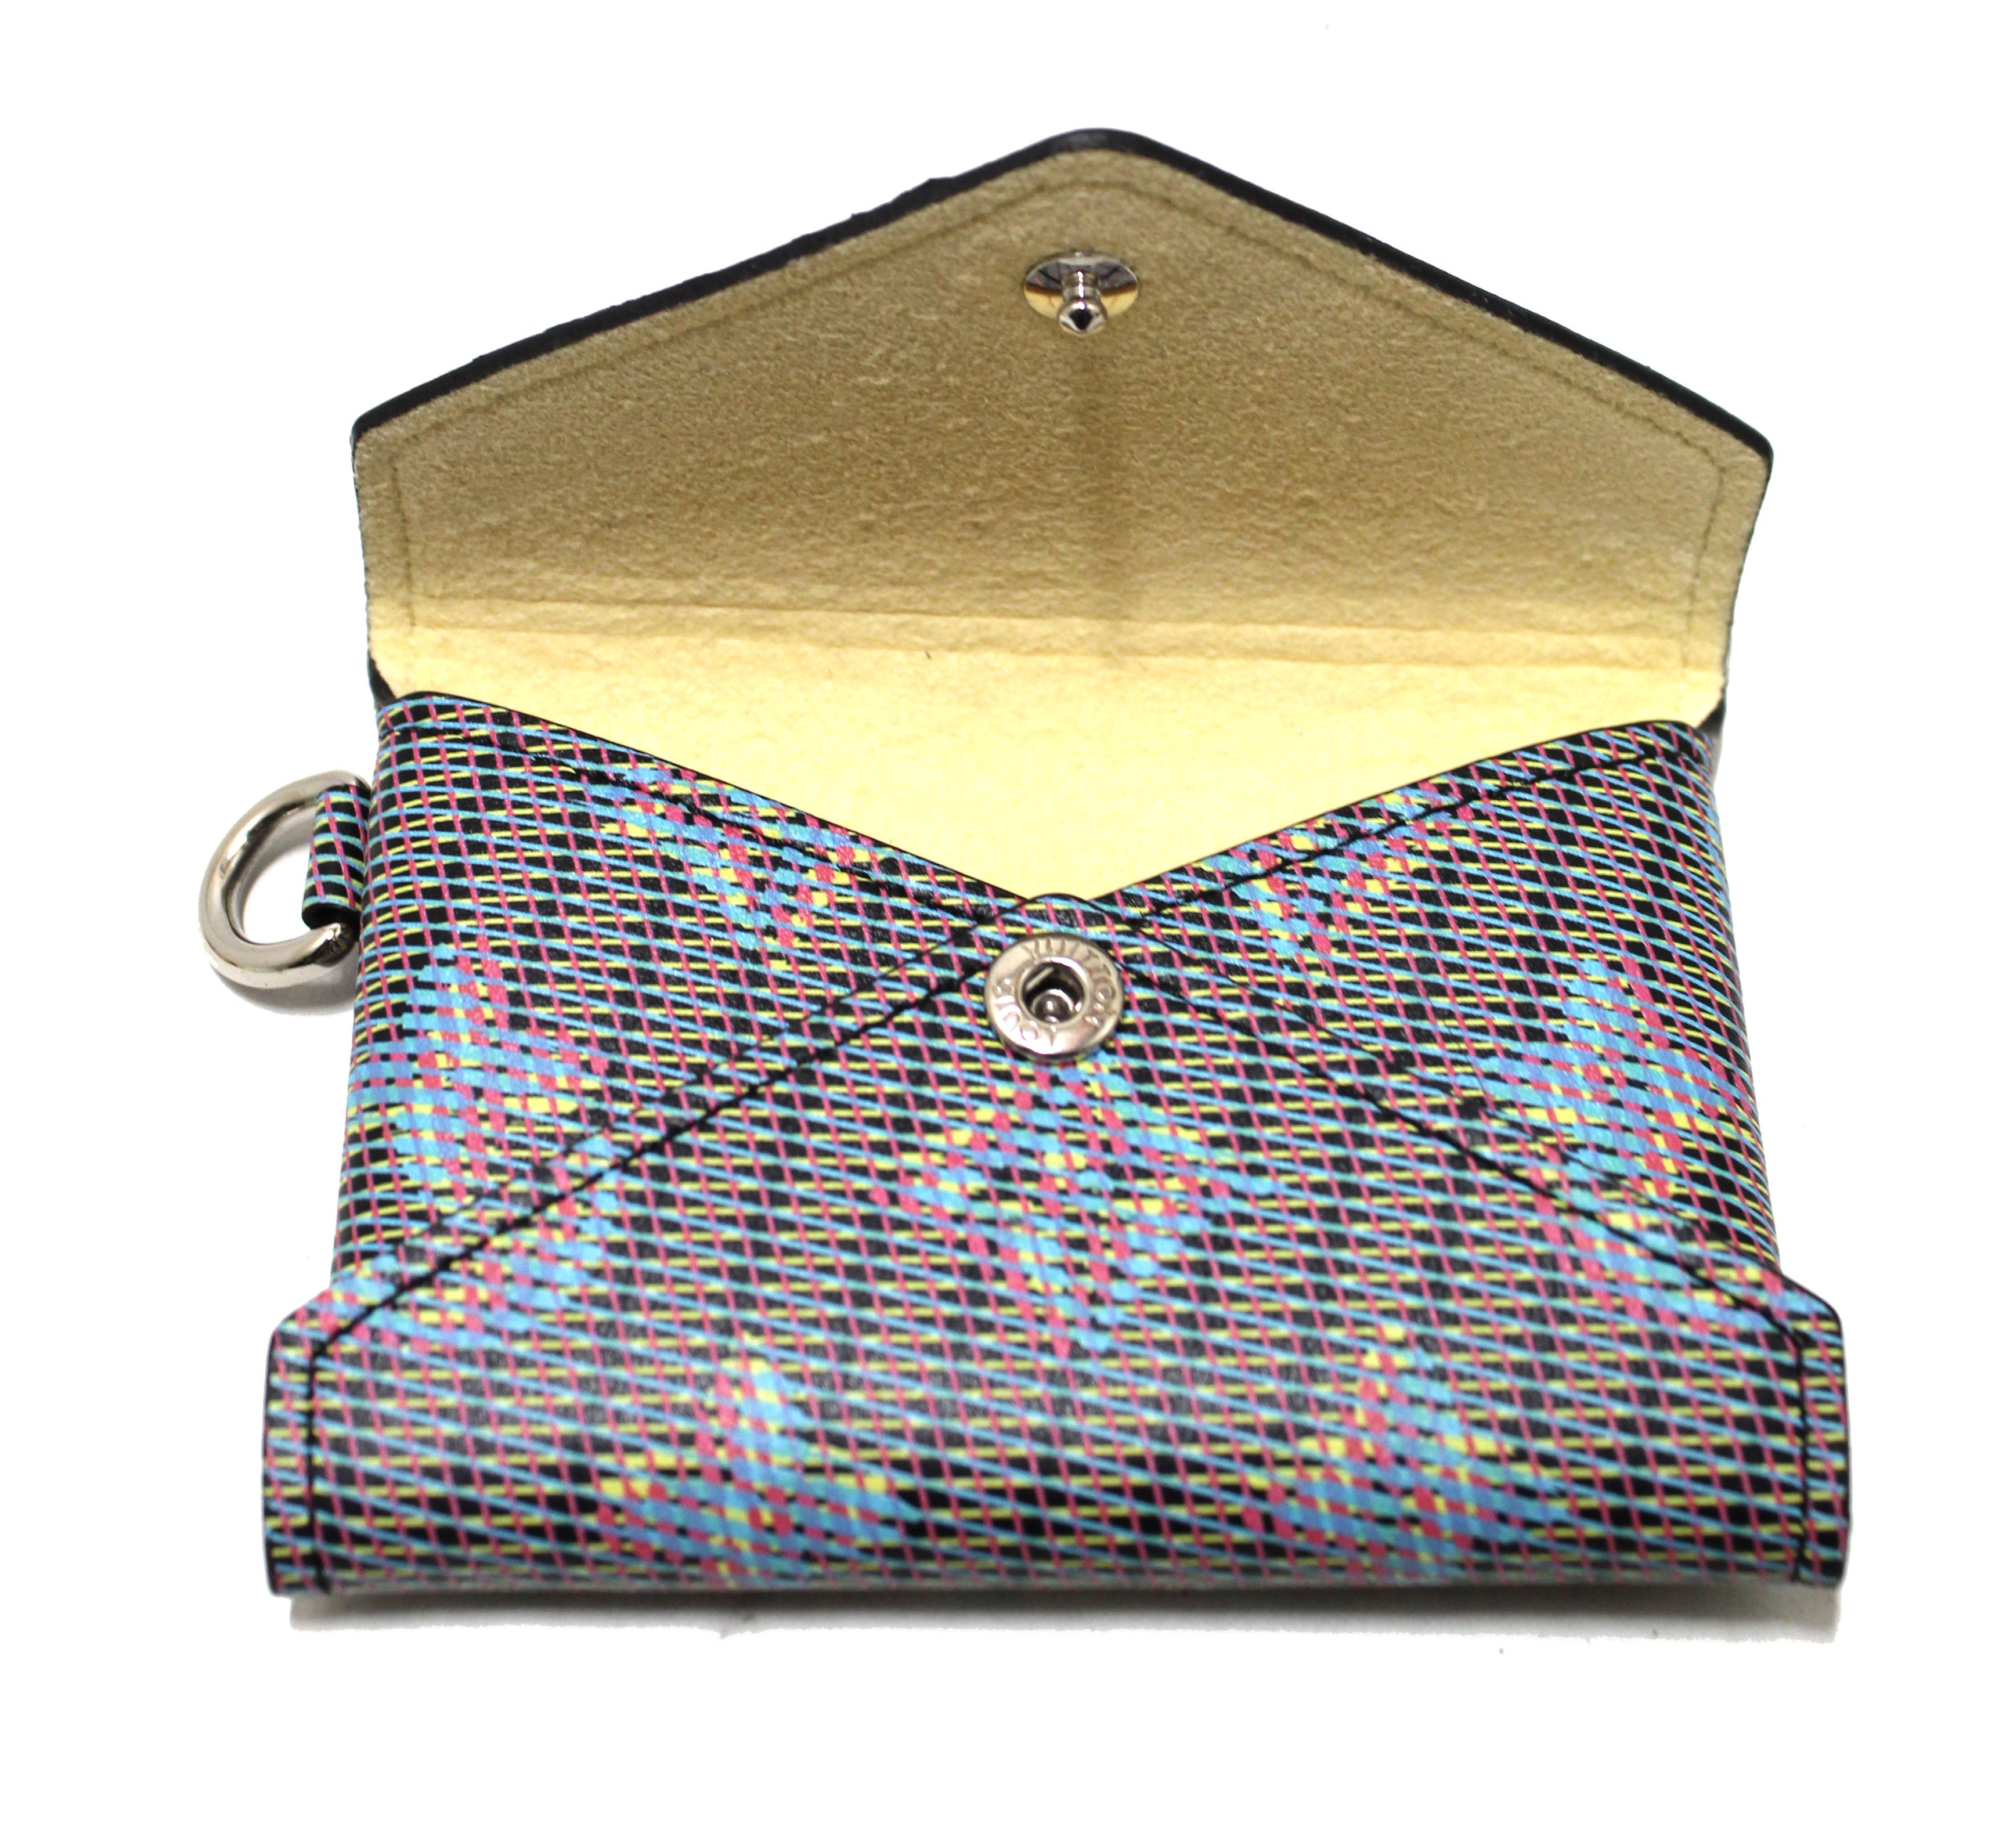 Authentic New Louis Vuitton Pop Canvas Kirigami Card Case Holder Wallet